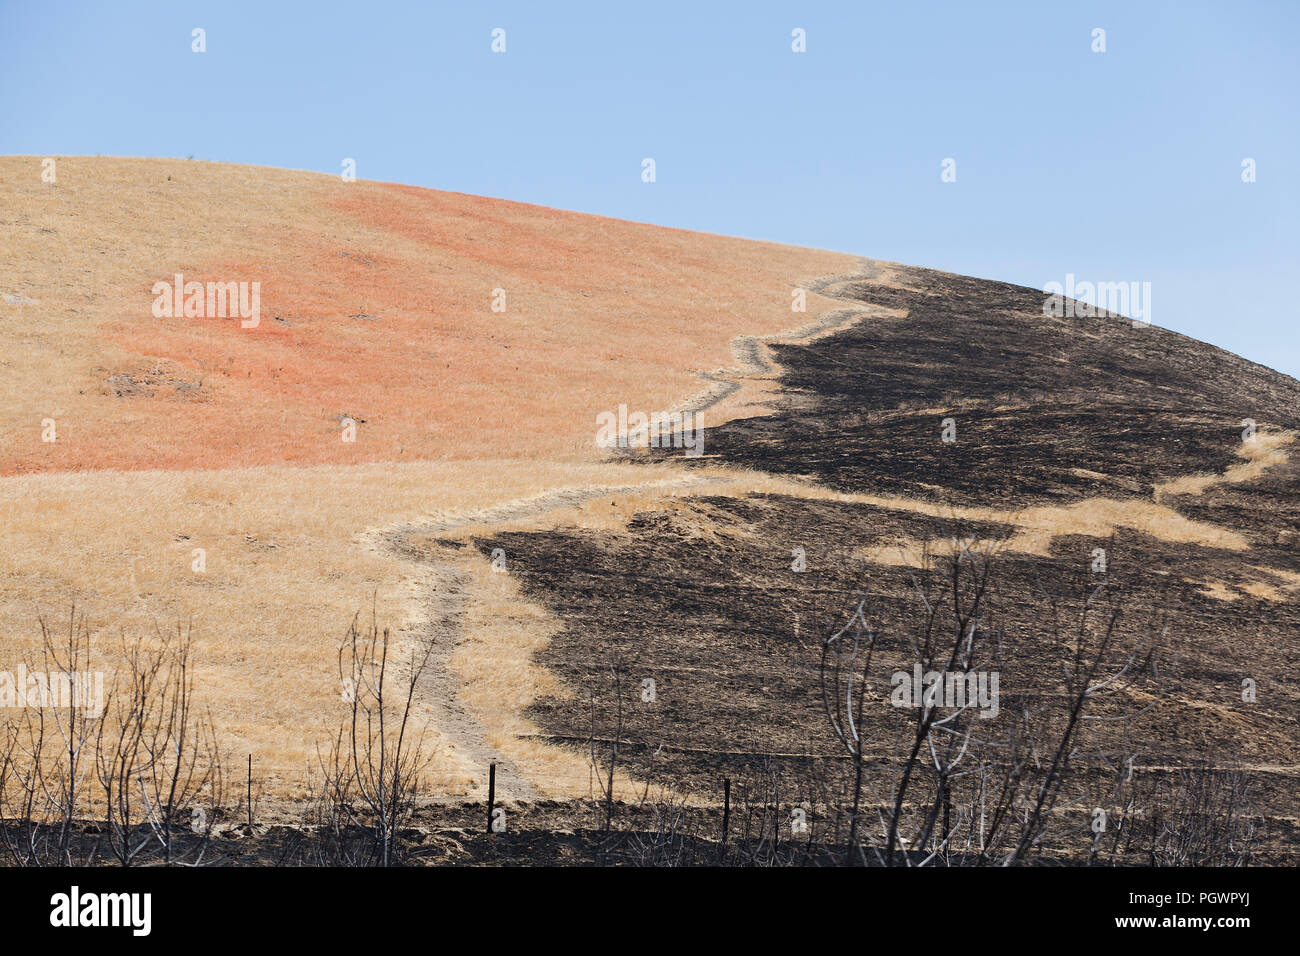 Kontrollierte Burn (Brennen) verordnet der trockenen Vegetation - Kalifornien USA Stockfoto